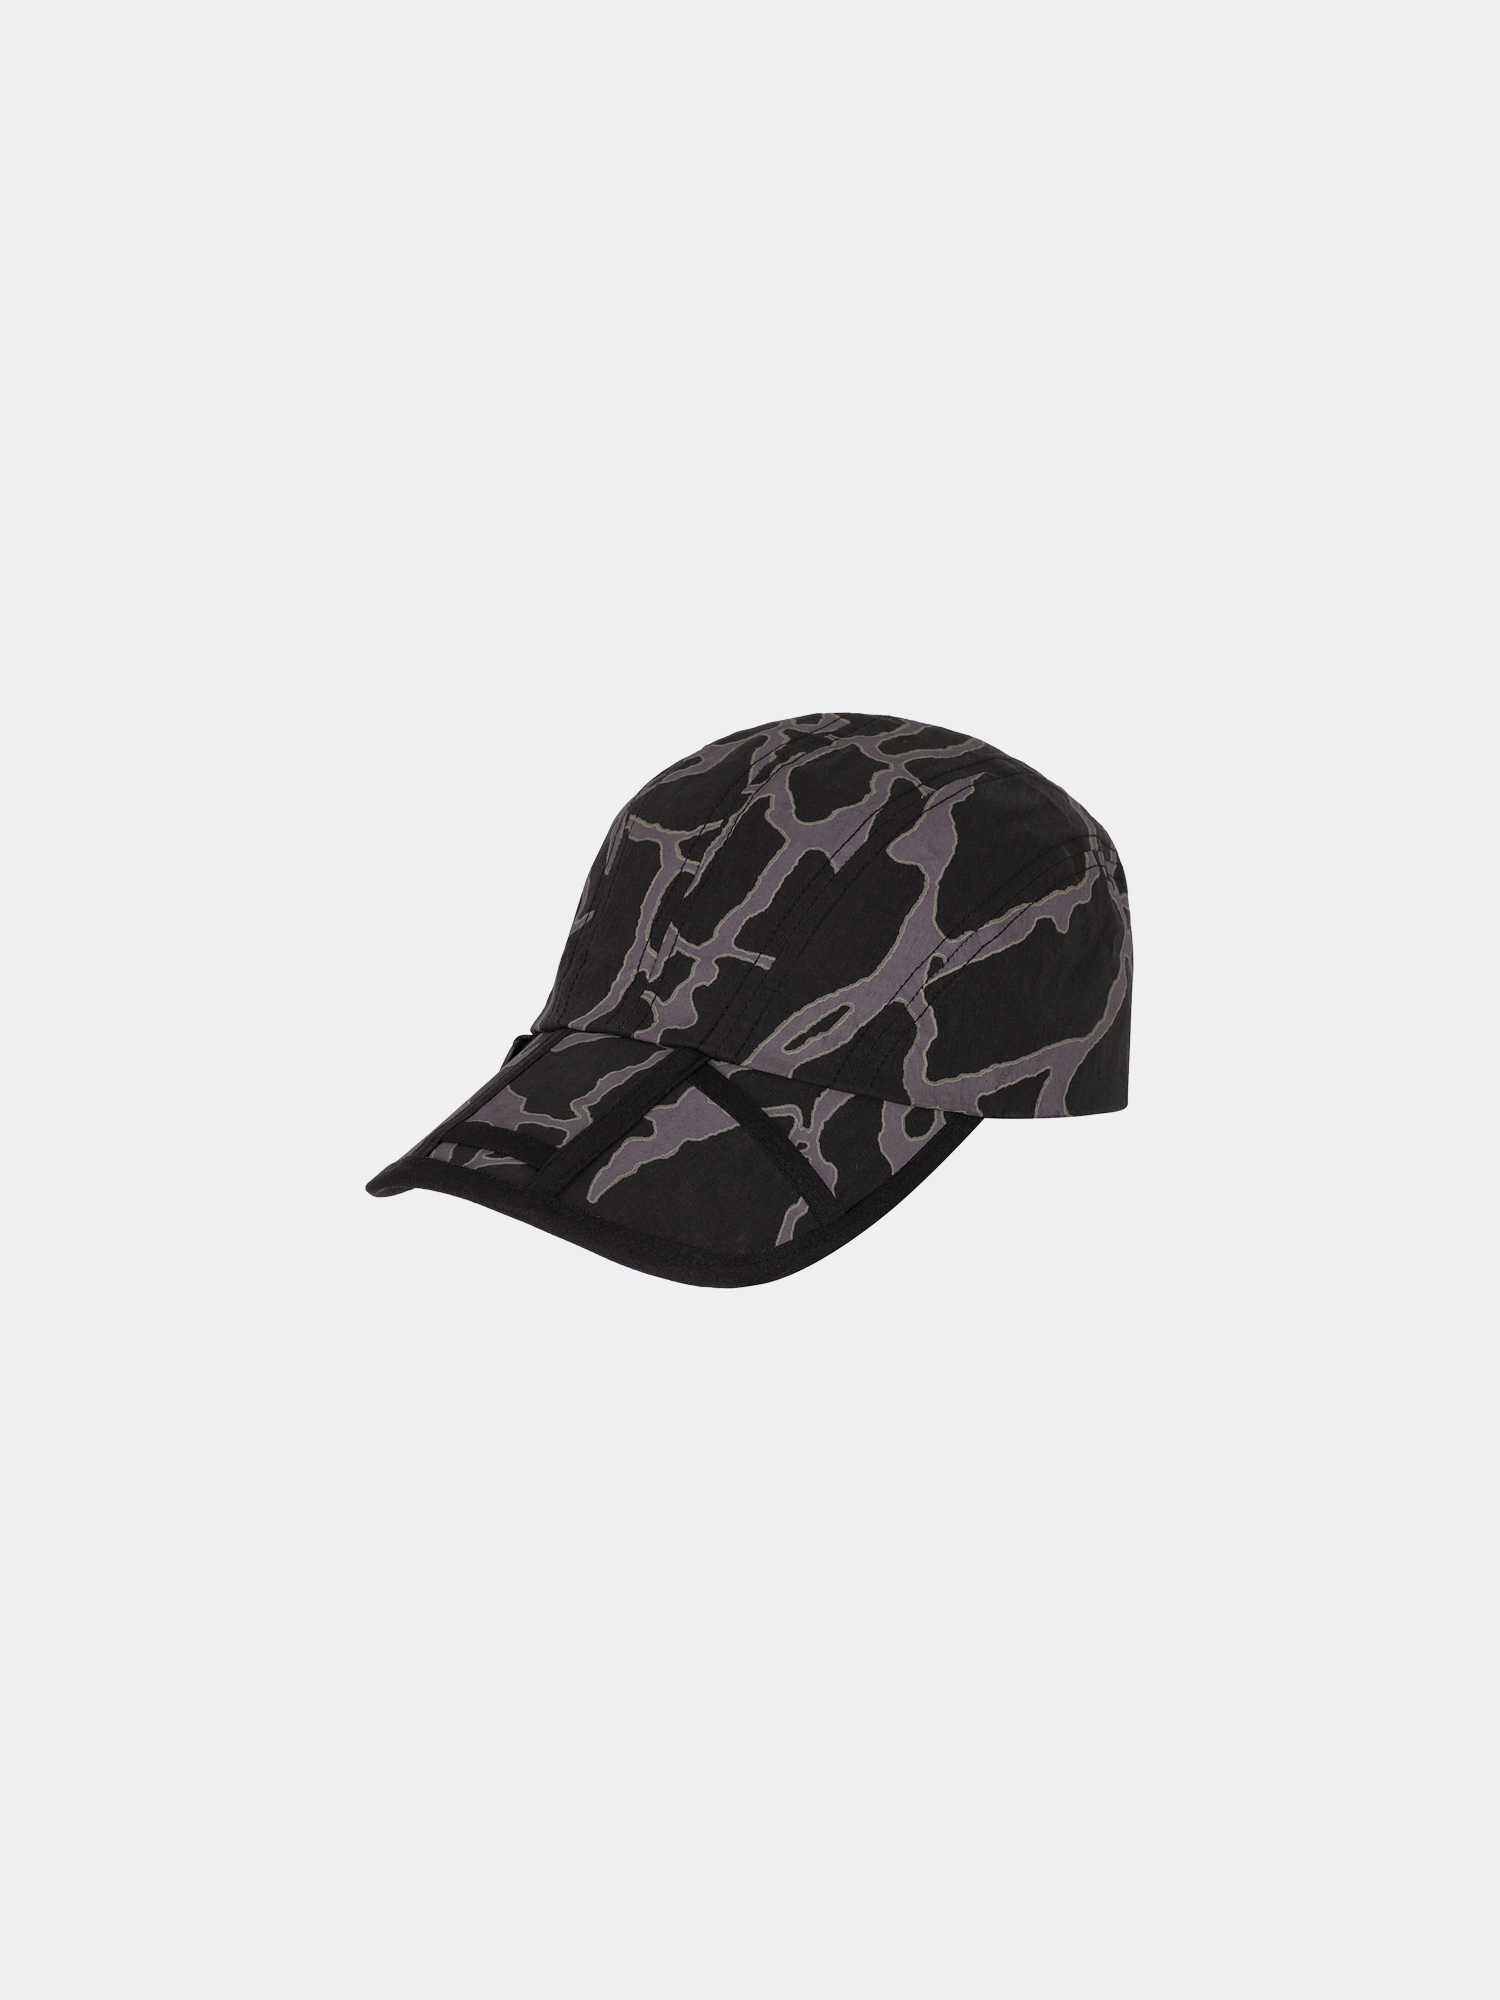 SOHC PATTERNED CAP-BLACK